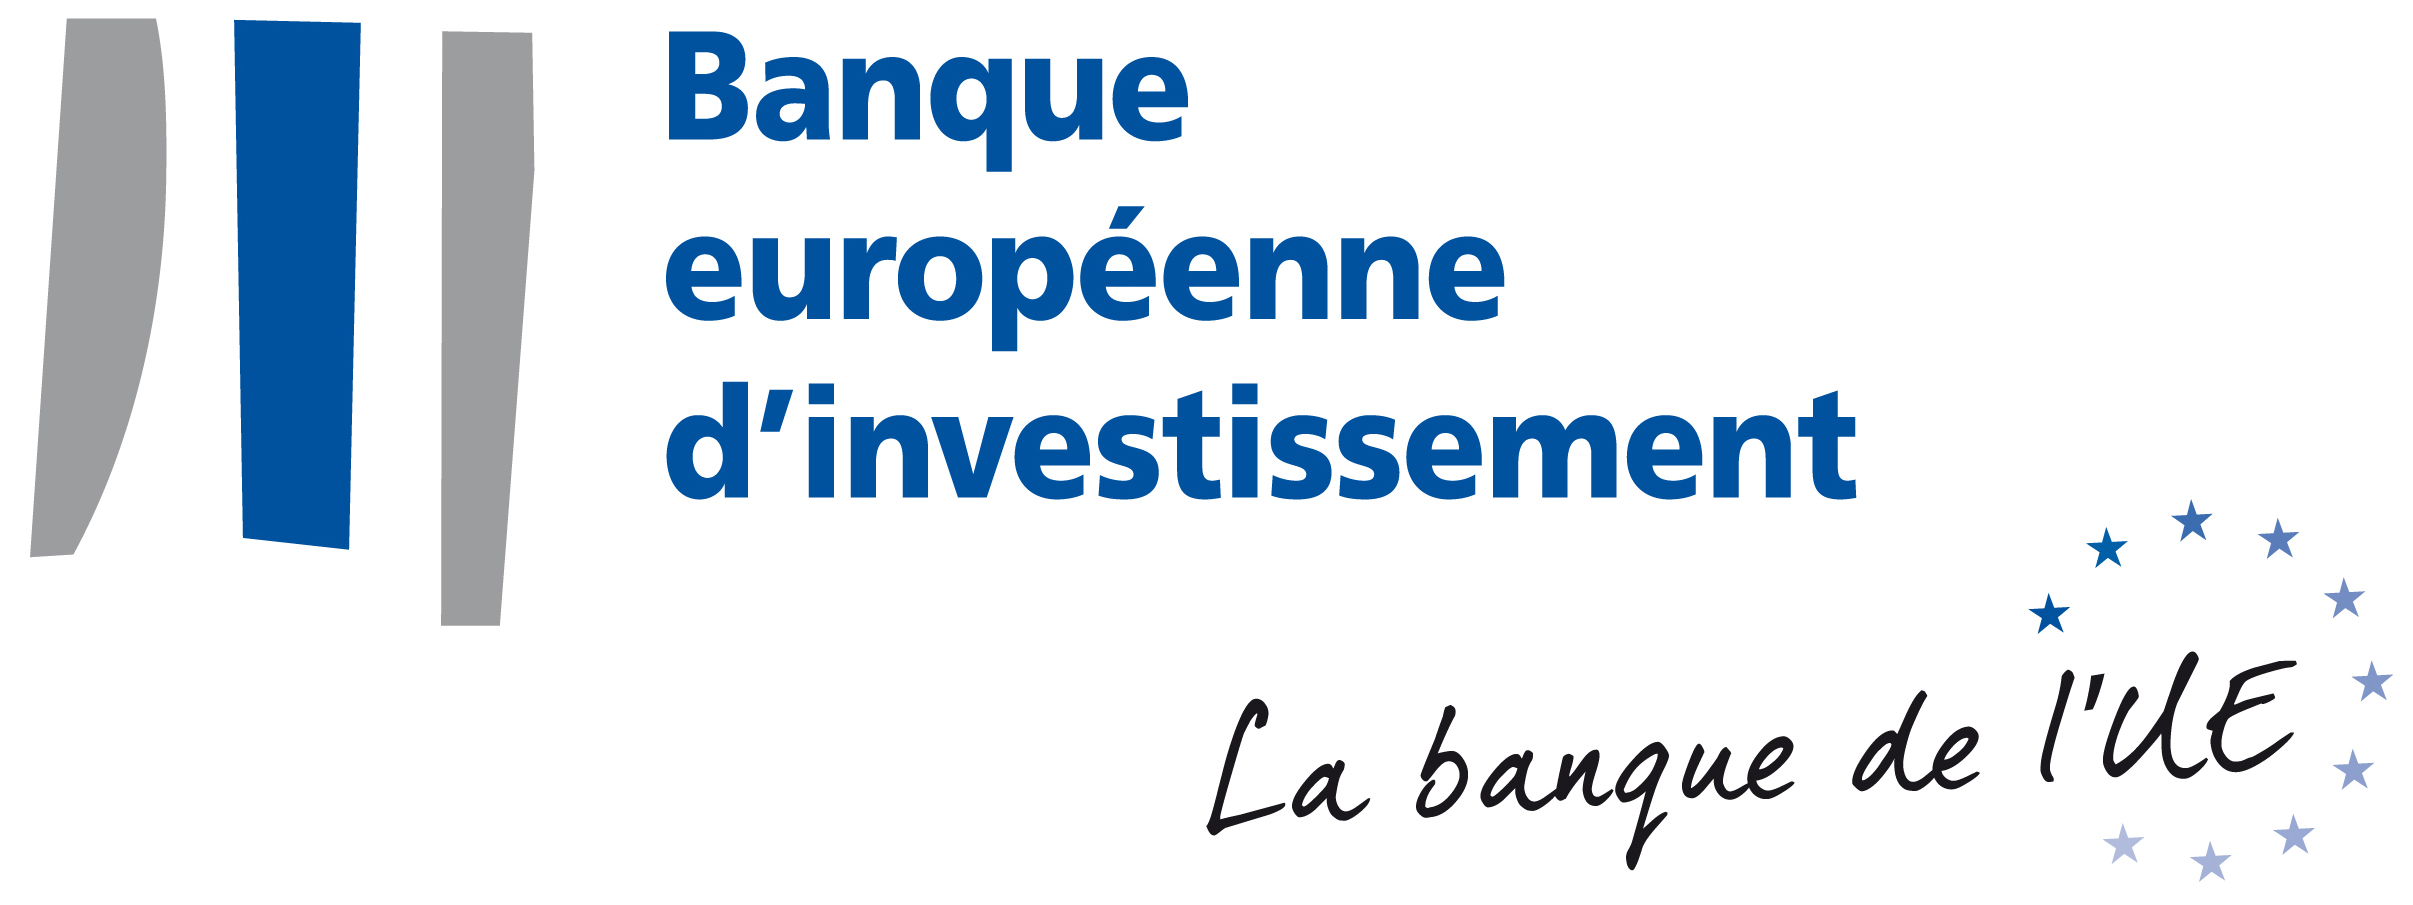 BEI - Banque européenne d'investissement